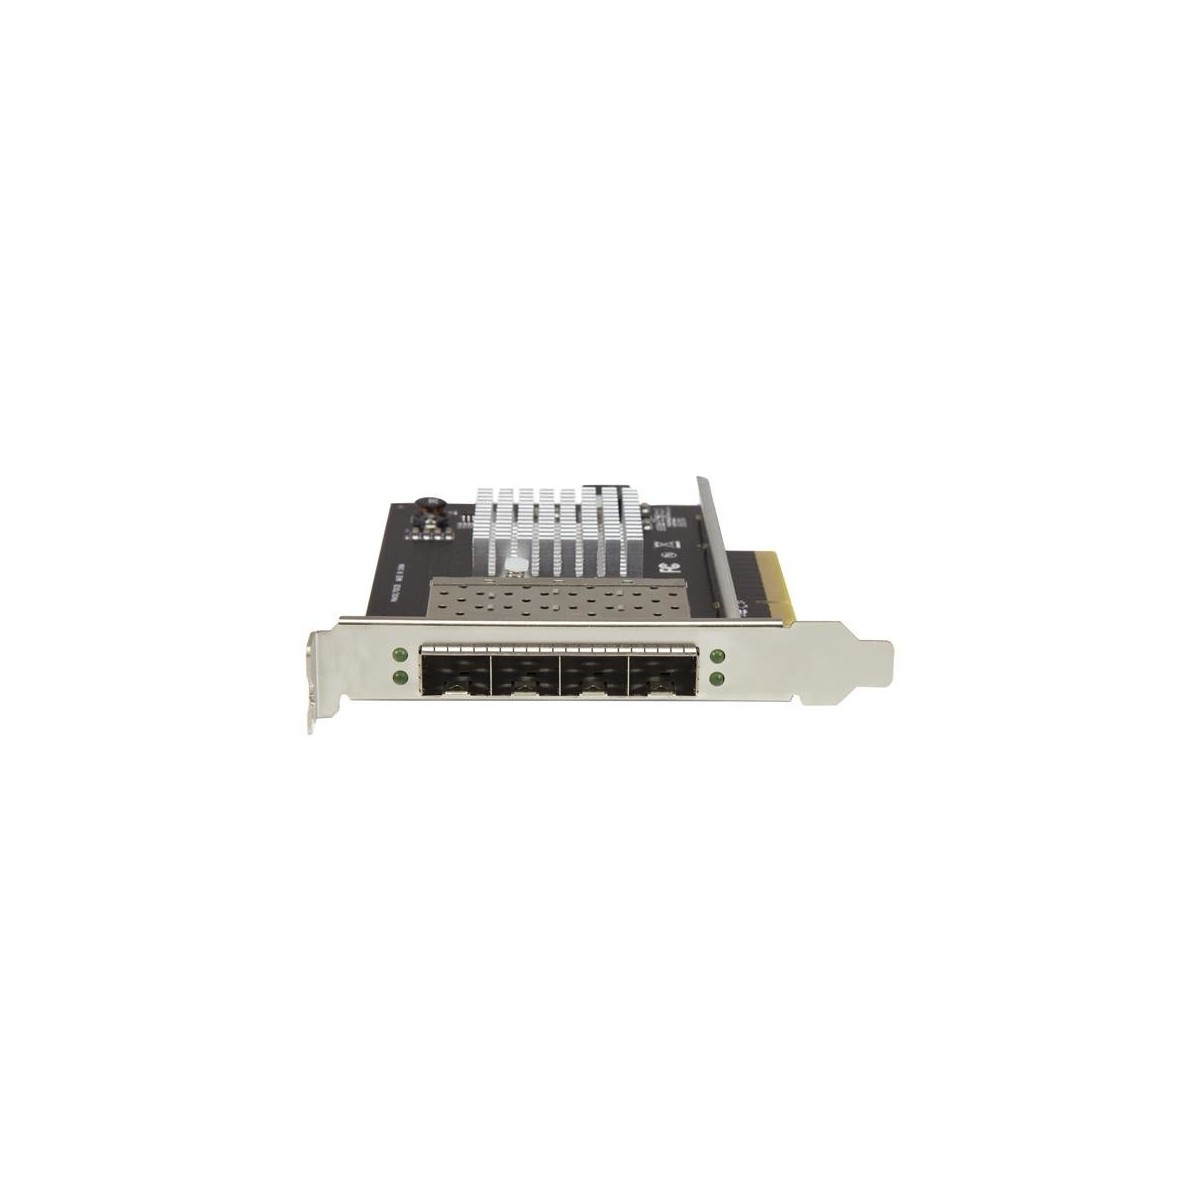 StarTech.com Quad Port 10G SFP+ Network Card - Intel XL710 Open SFP+ Converged Adapter - PCIe 10 Gigabit Ethernet Server NIC - 1